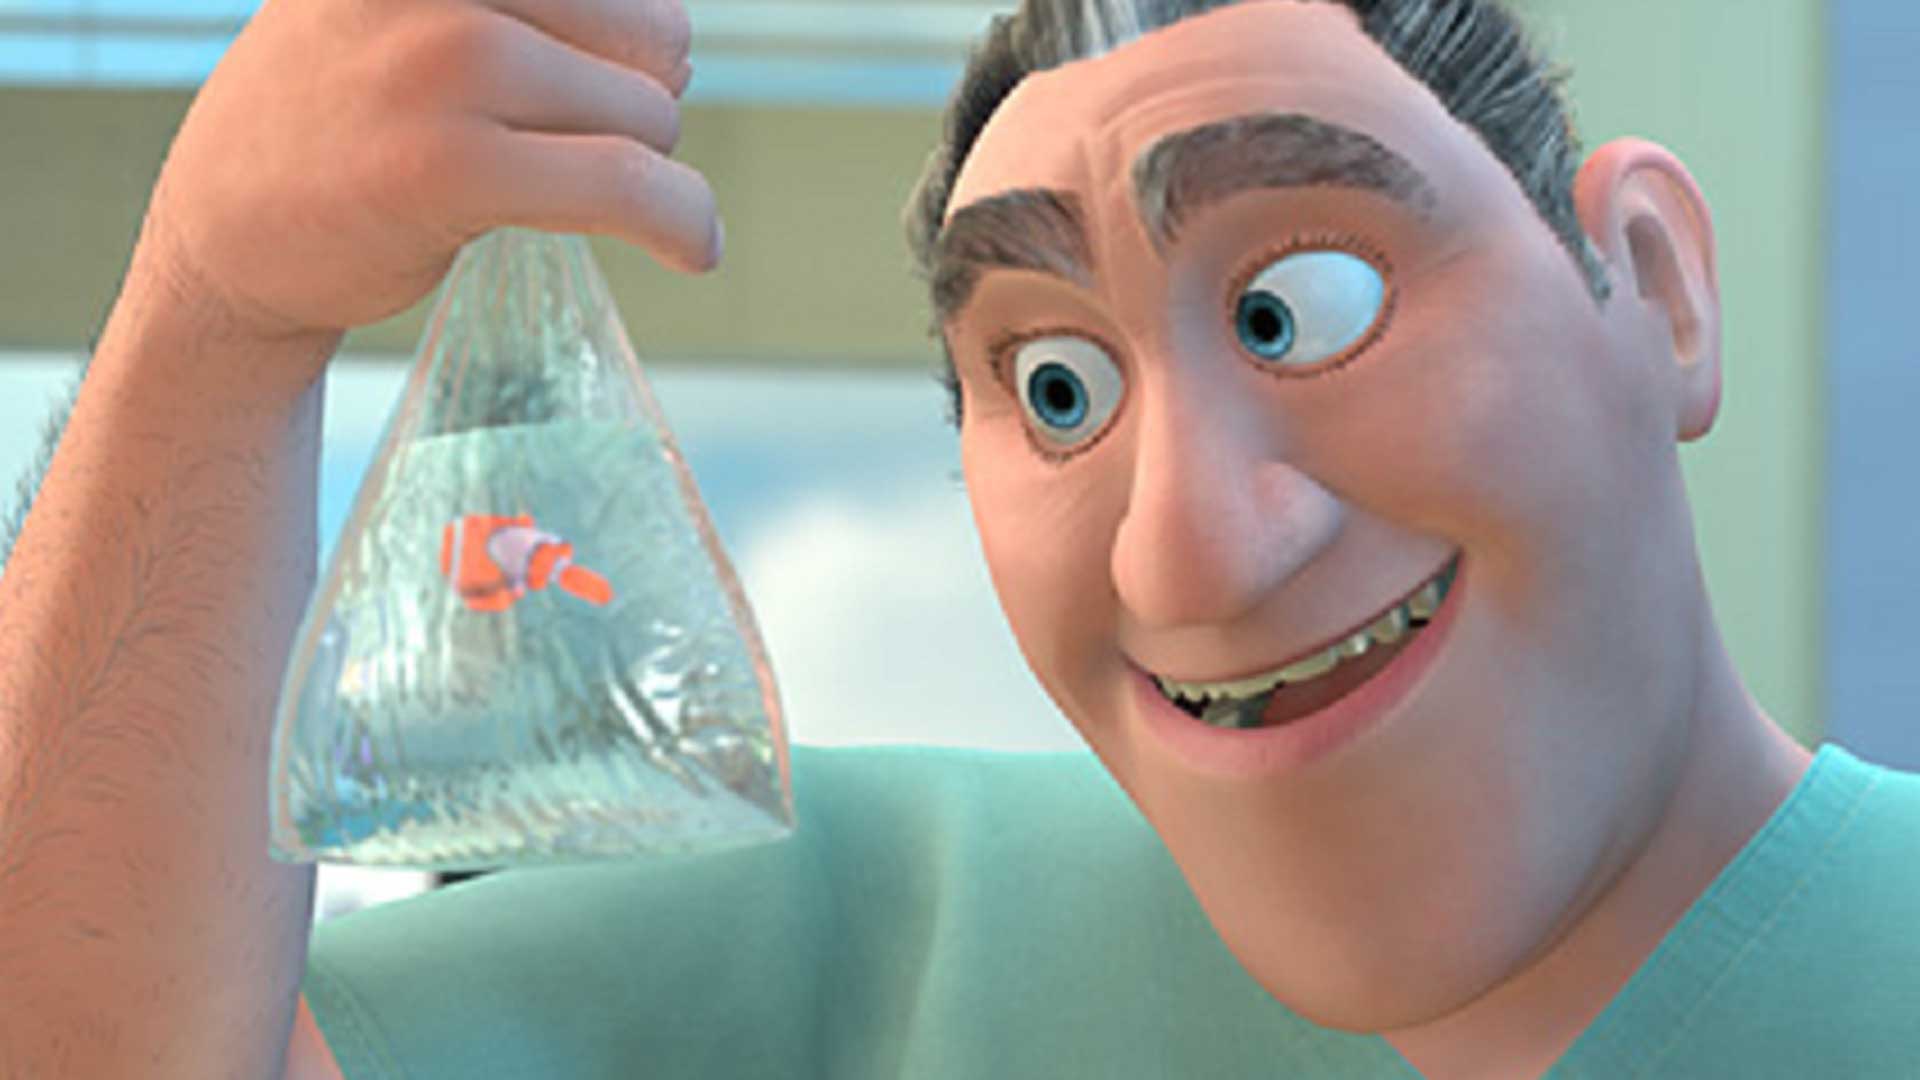 Finding Nemo dentist